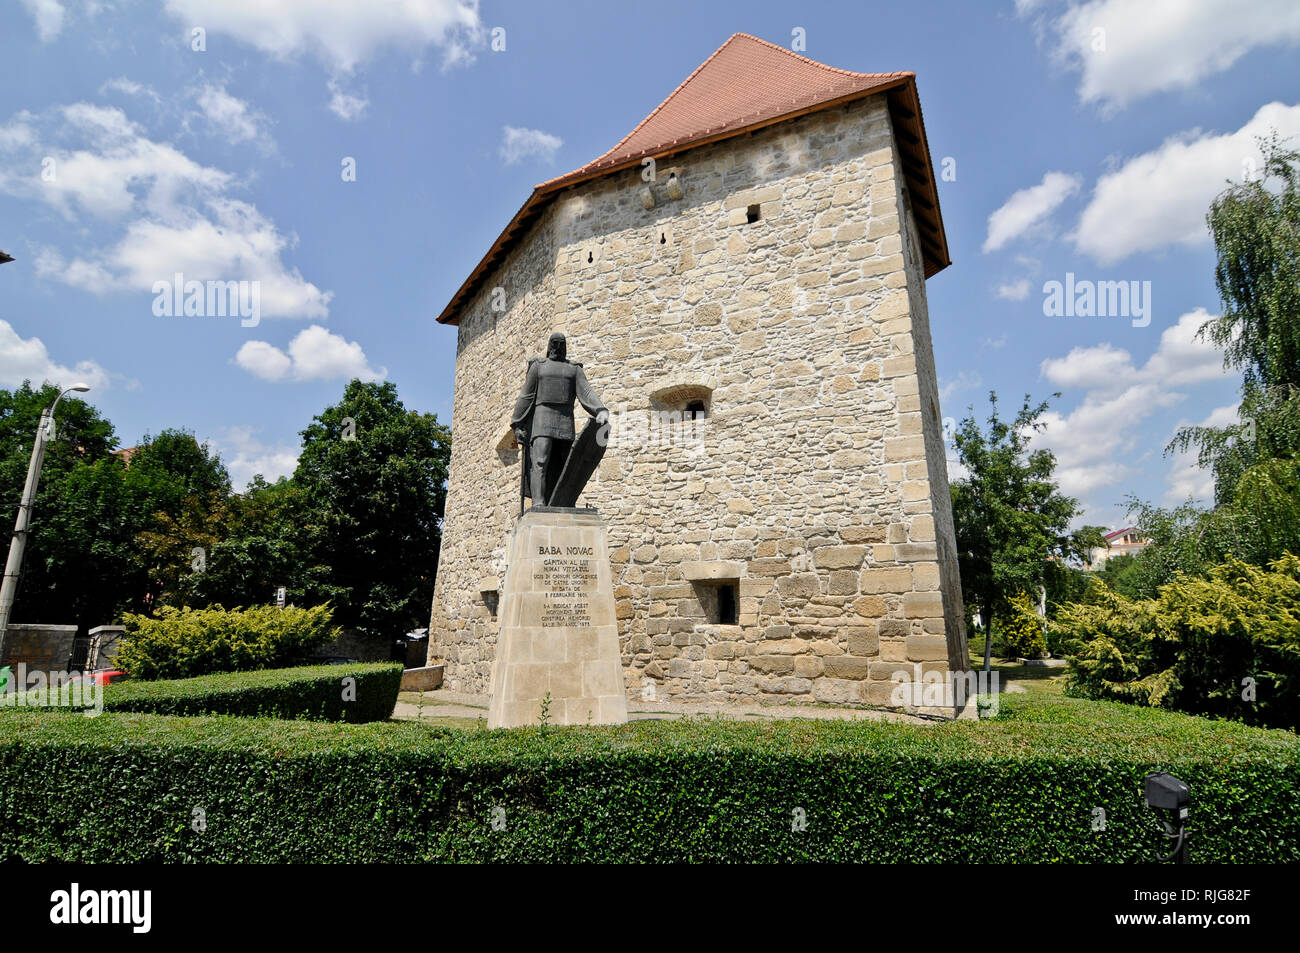 Tailors' Bastion and Baba Novac Statue. Cluj-Napoca, Romania Stock Photo